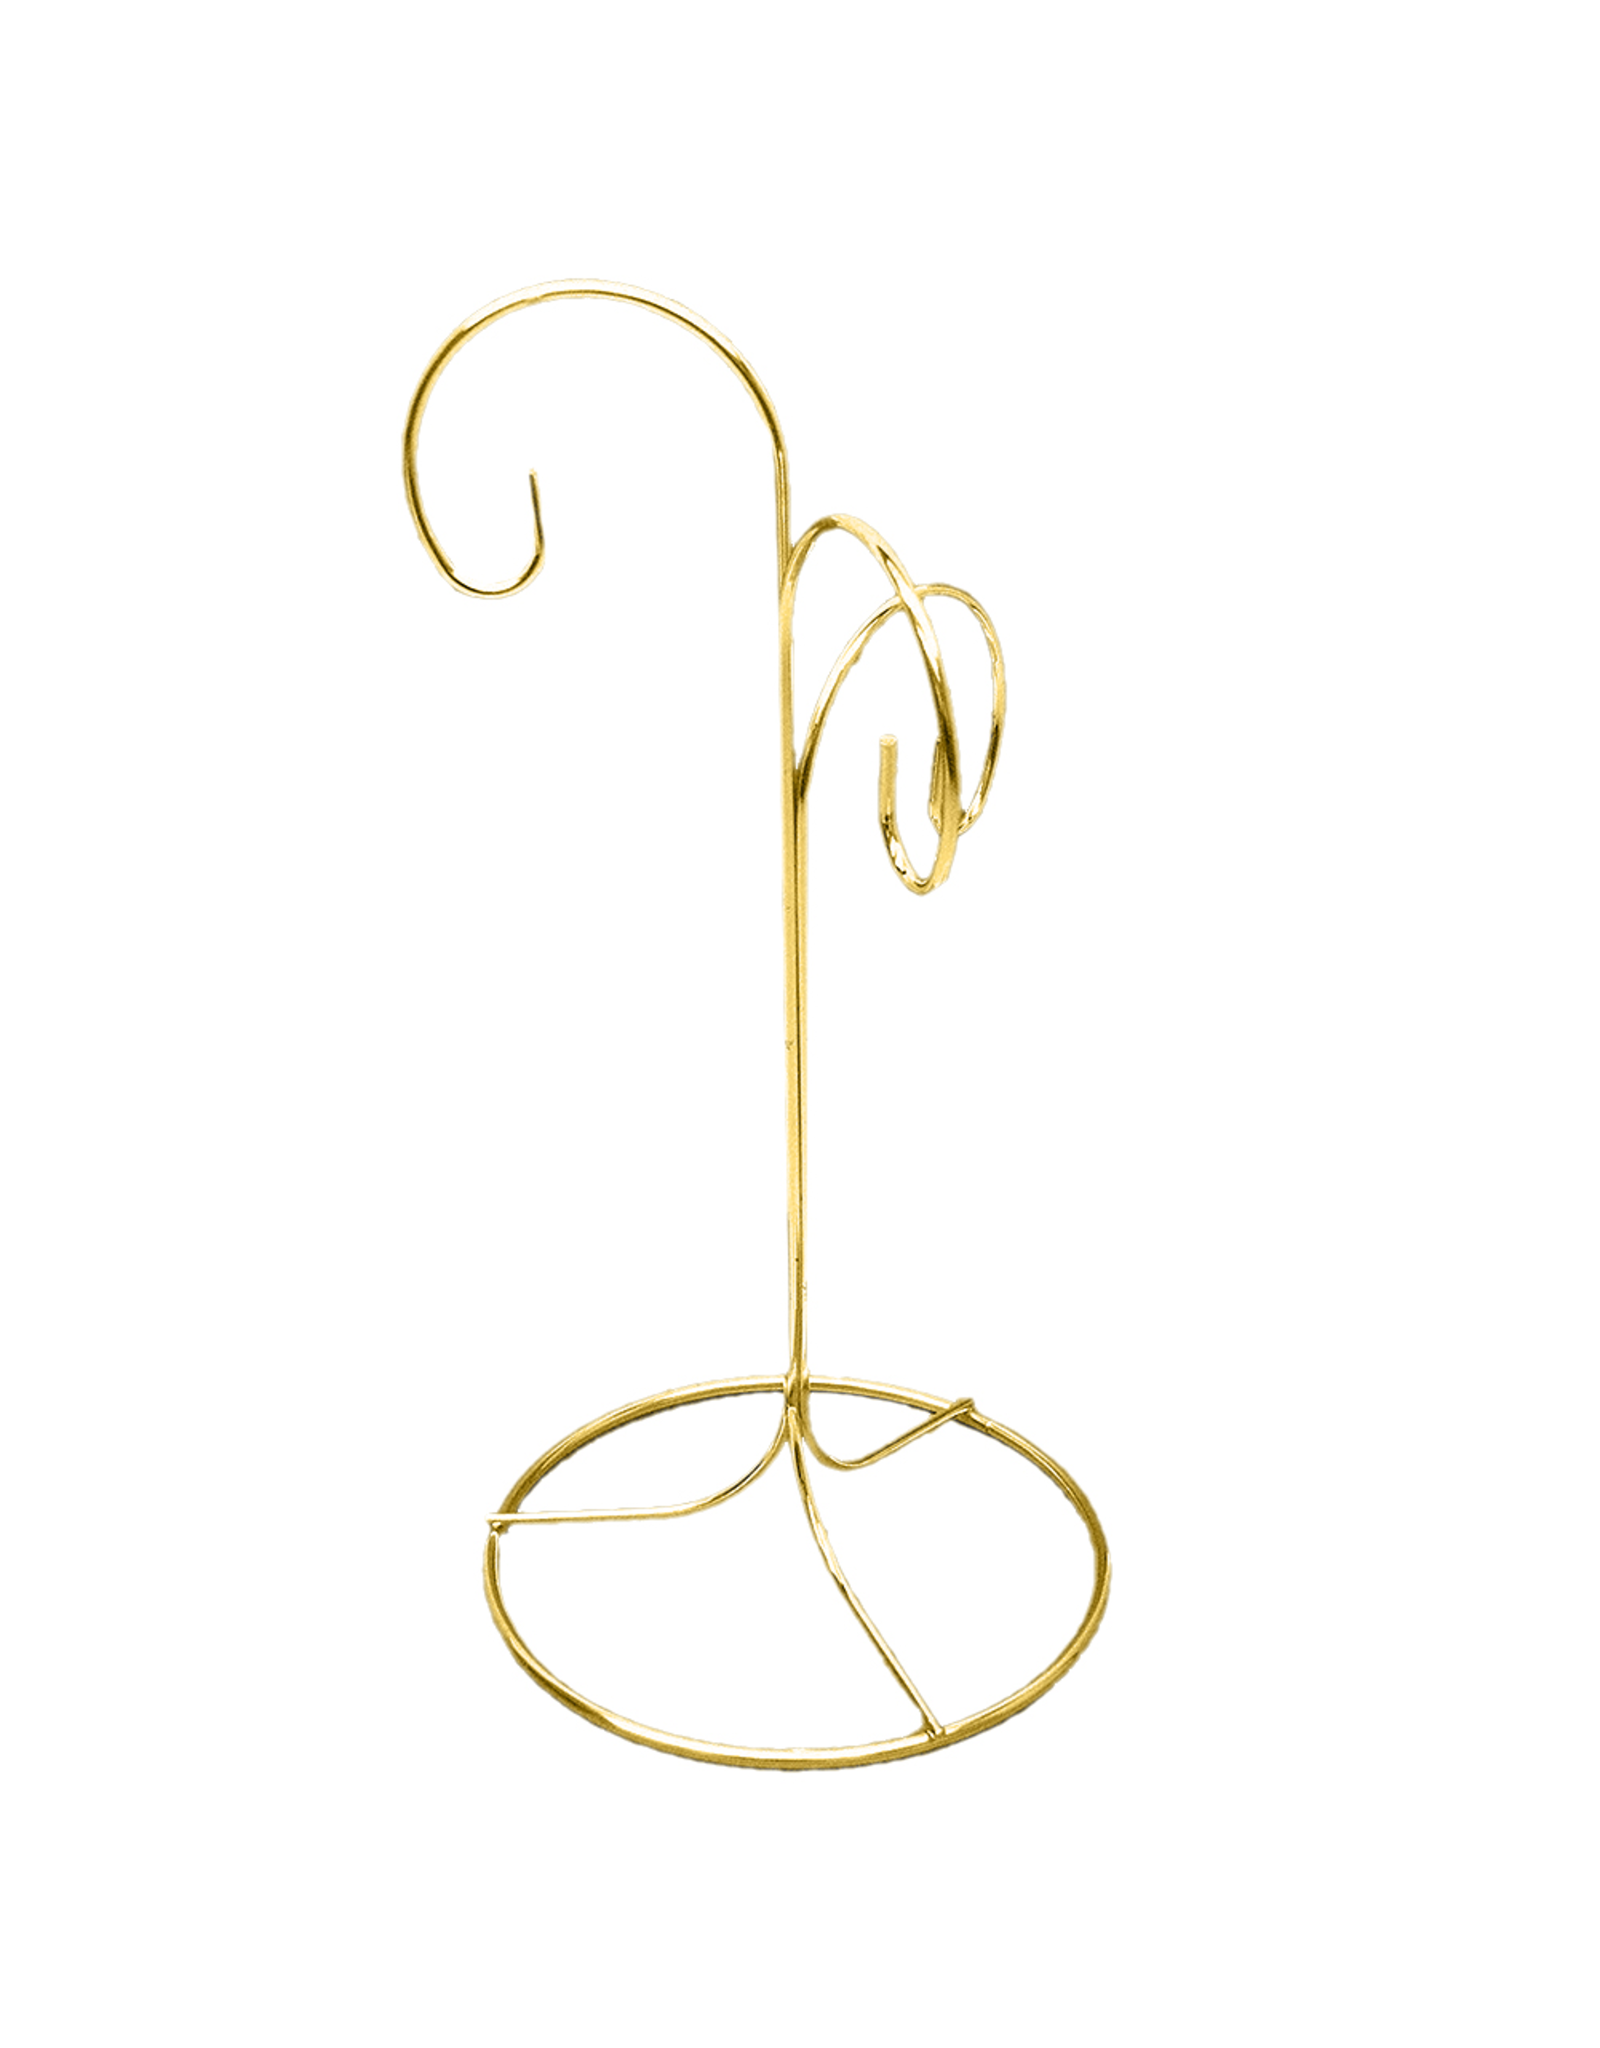 Kurt Adler Ornament Hanger Gold Metal Triple Ornament Holder Stand 9H inch